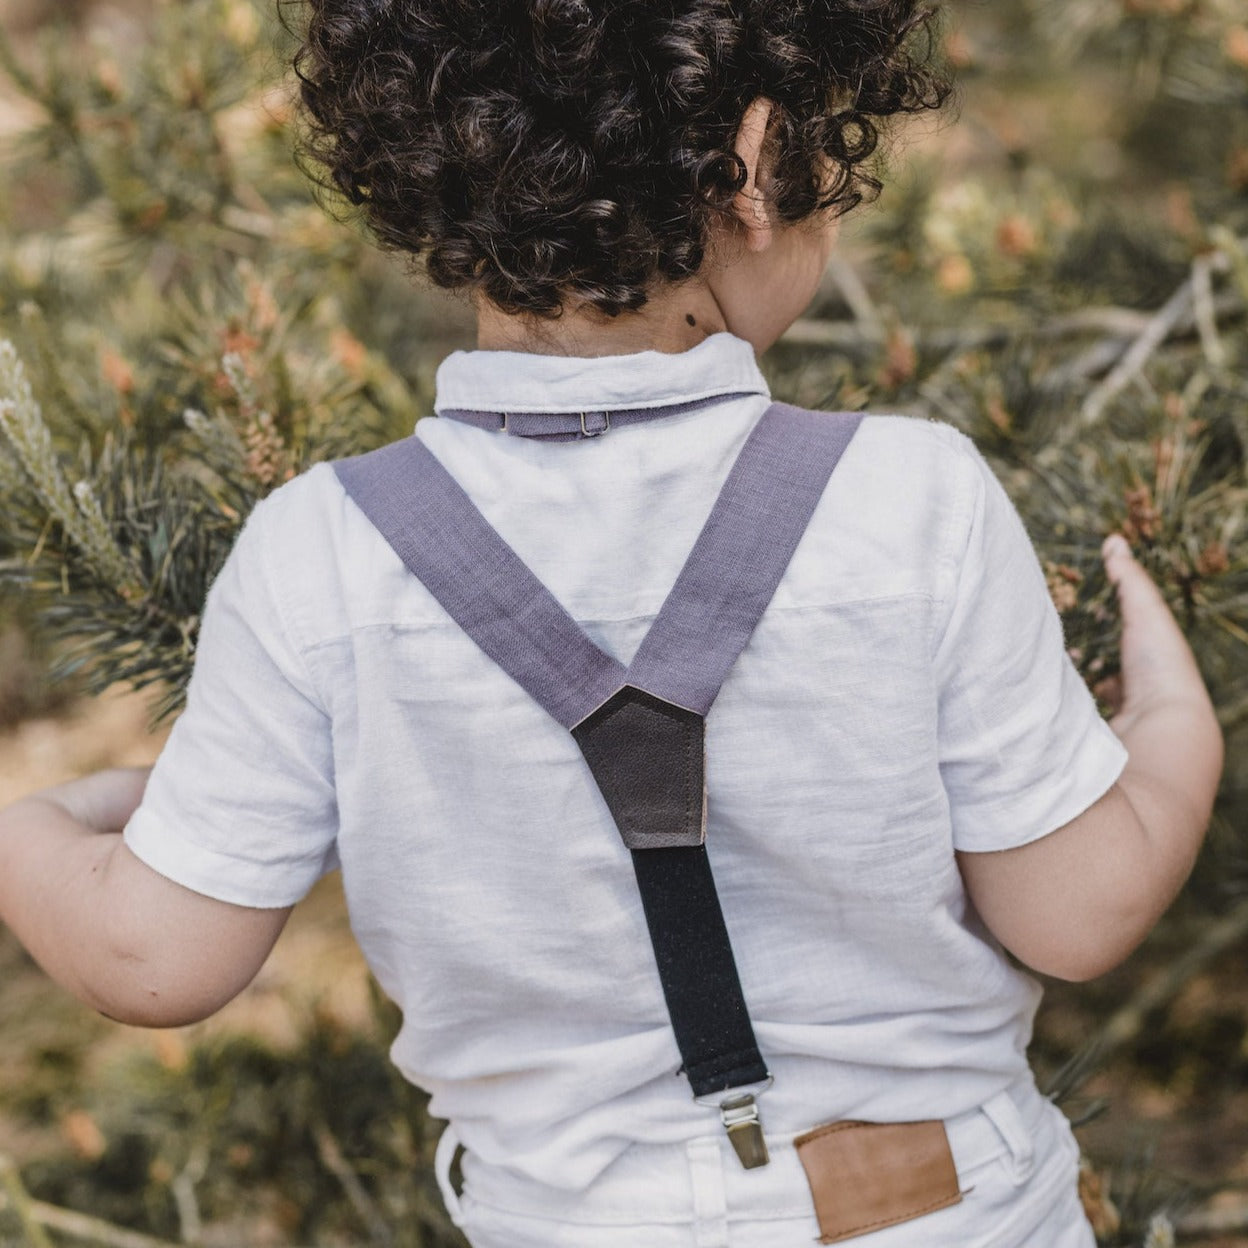 Kids Linen Suspender Bow Tie Set